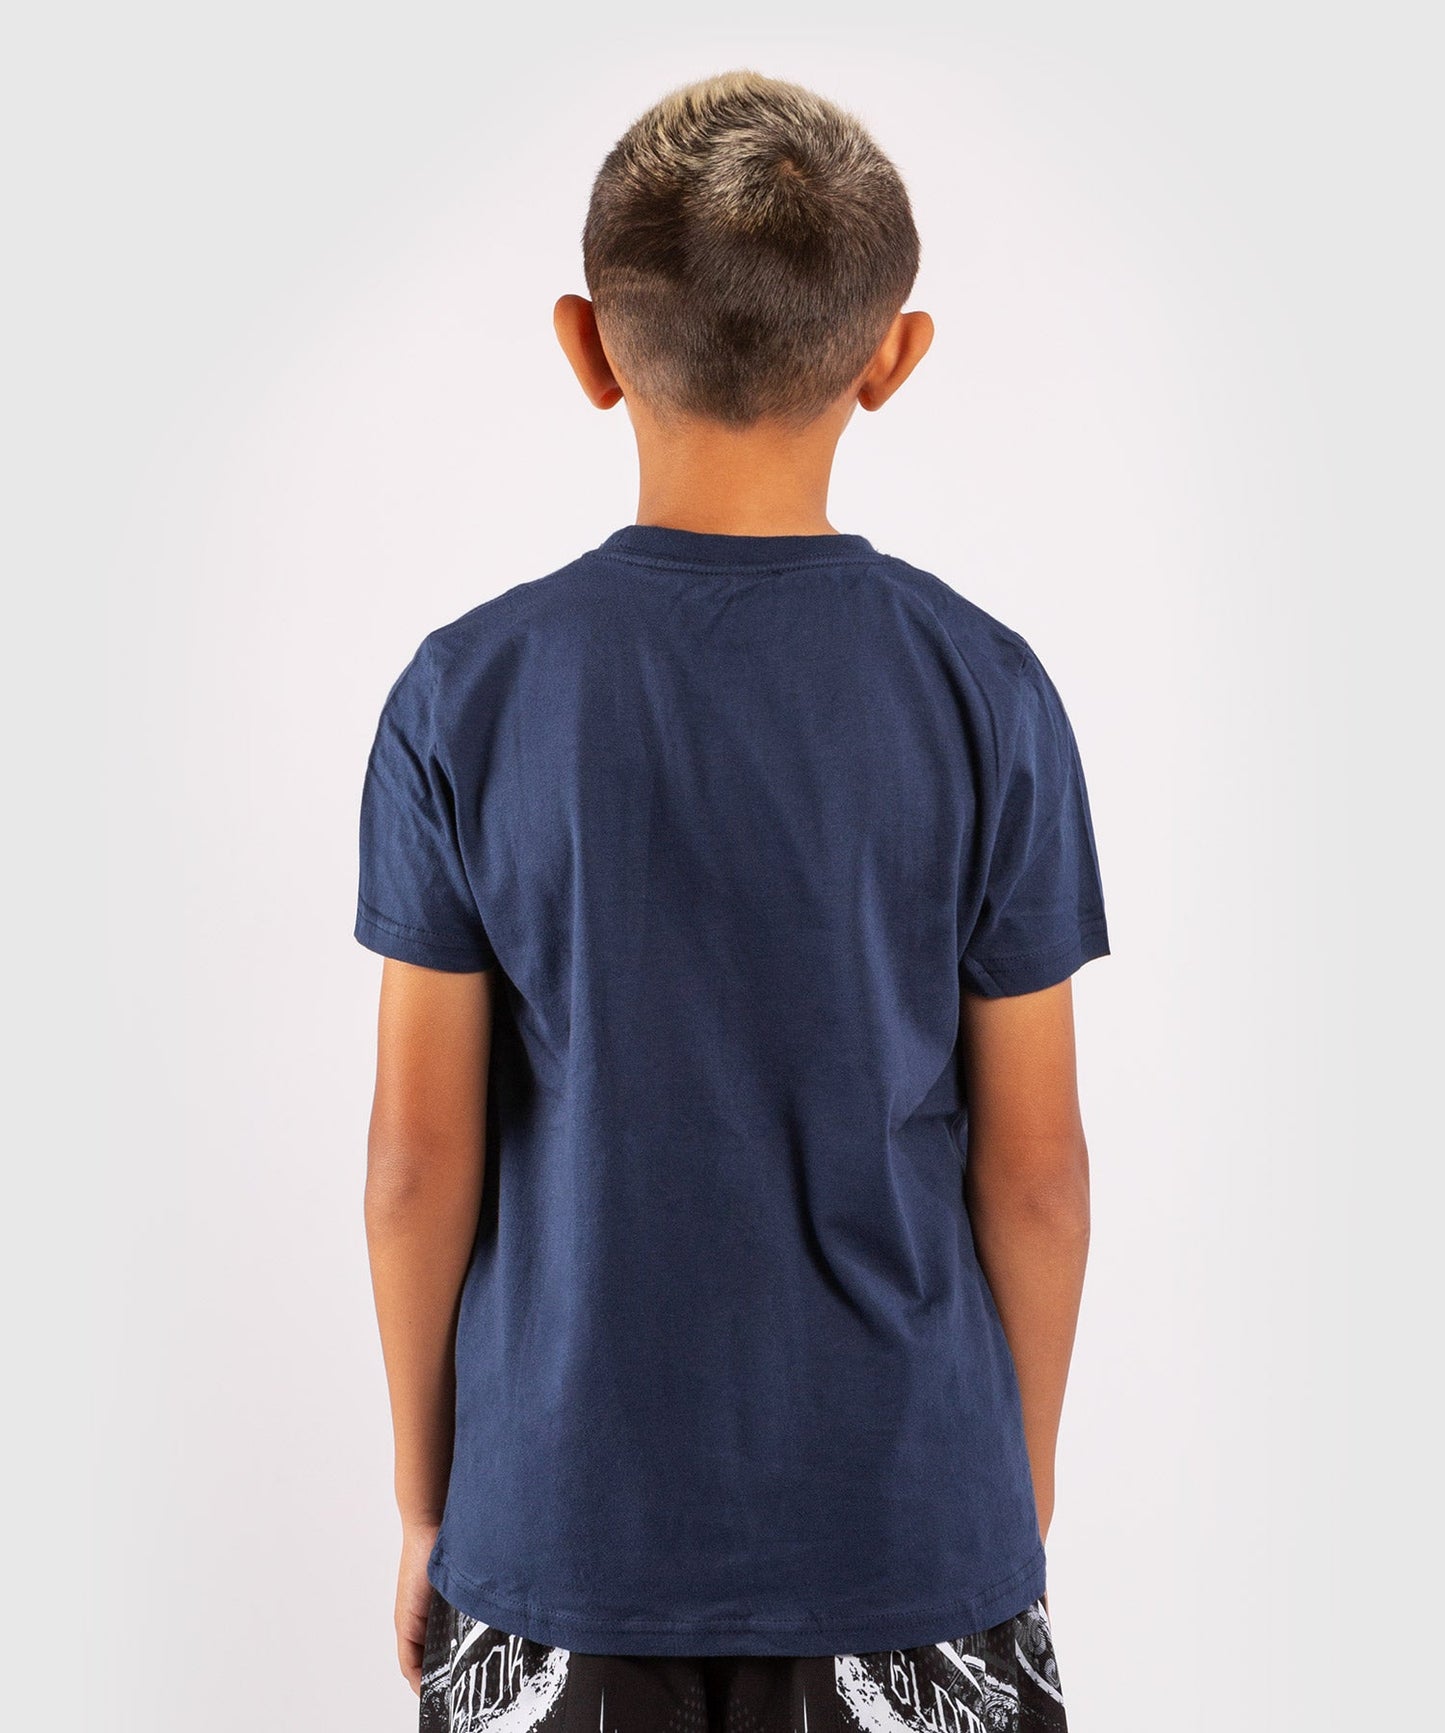 Venum Classic T-shirt - Kinderen - Marineblauw